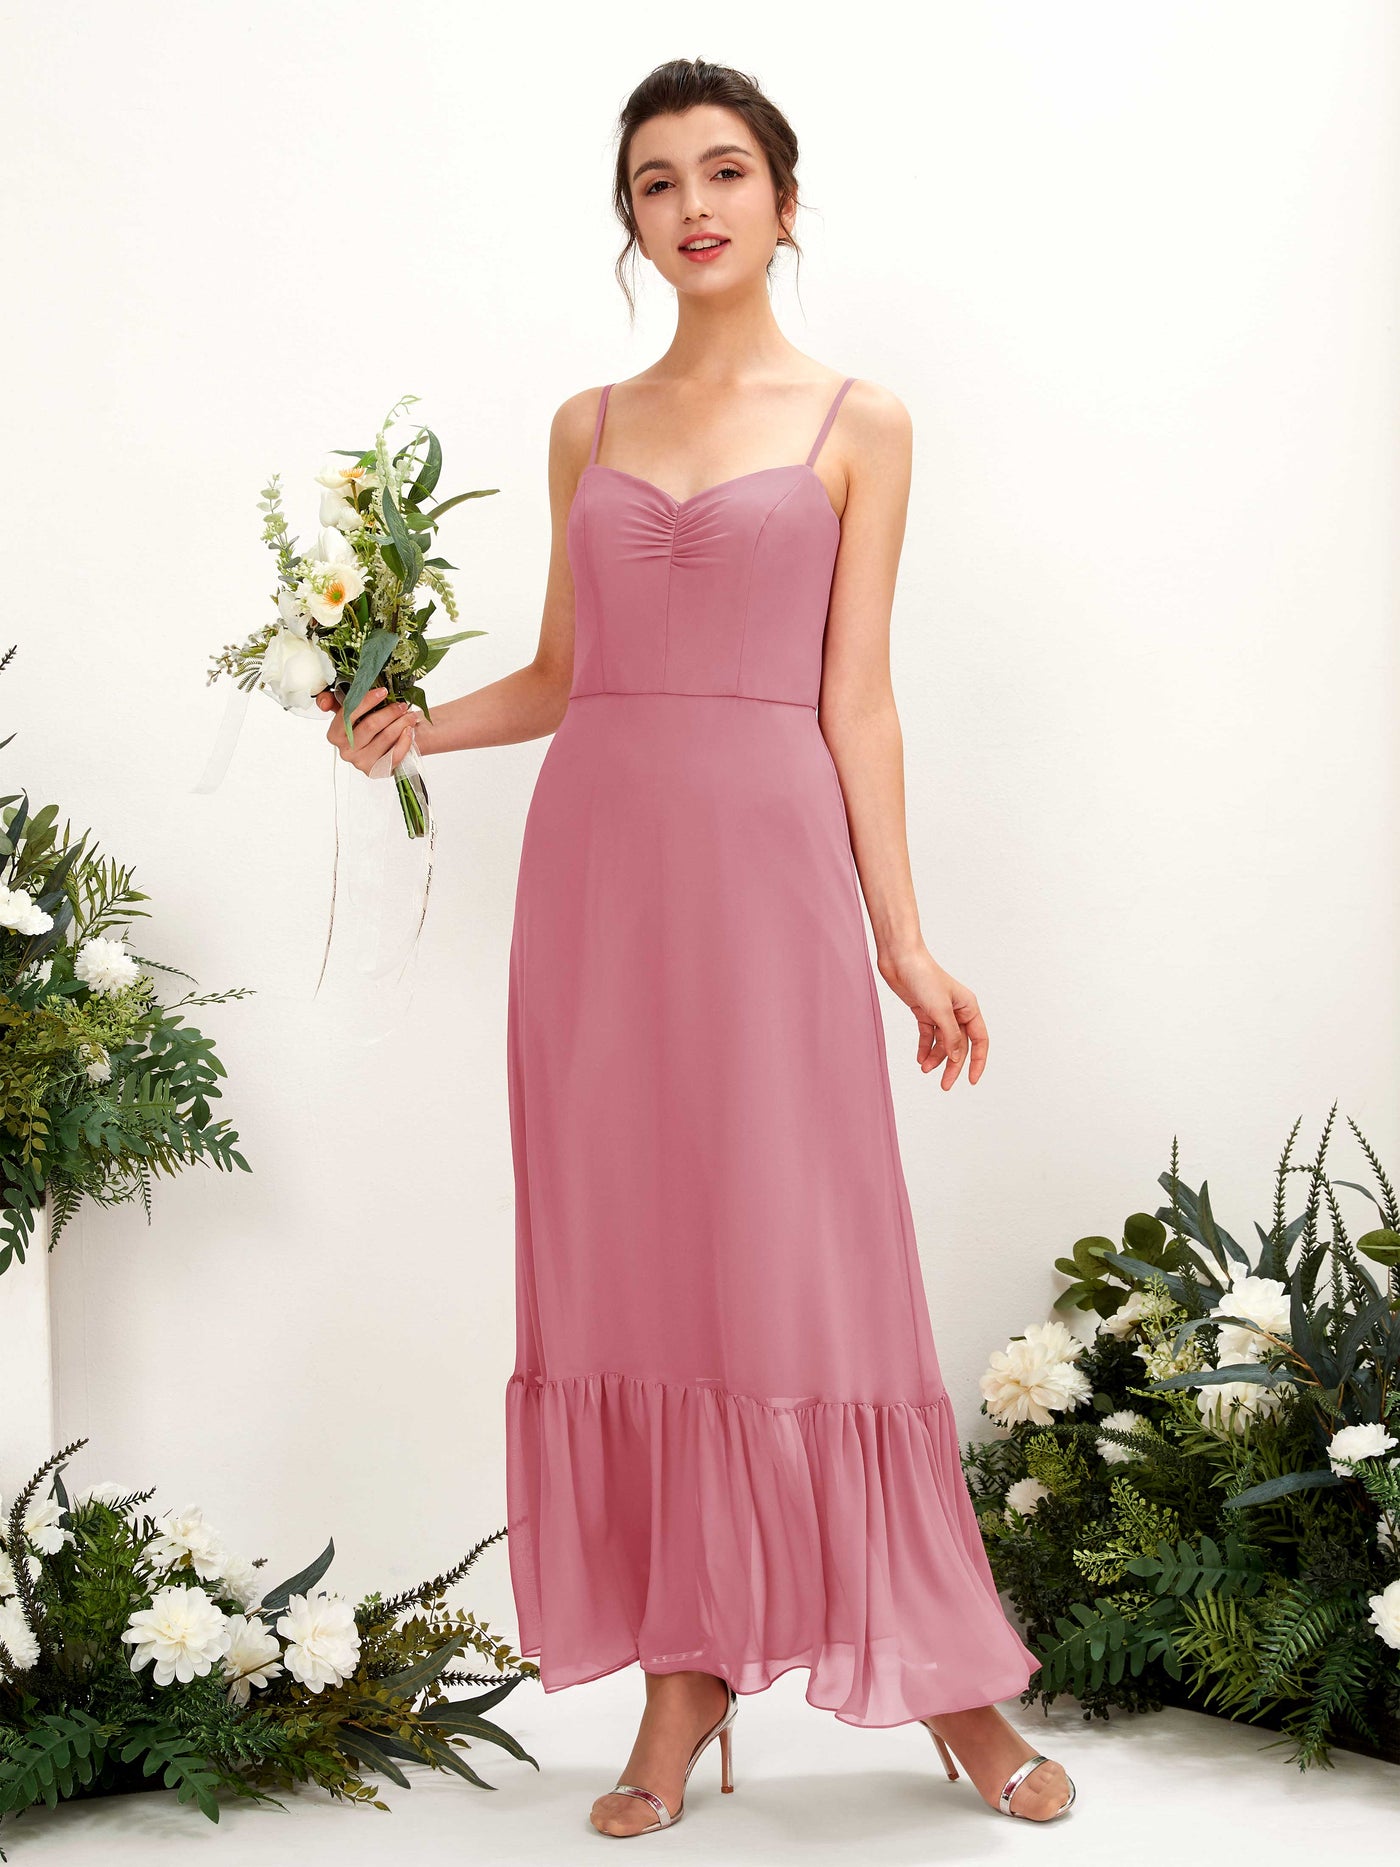 Desert Rose Bridesmaid Dresses Bridesmaid Dress Chiffon Spaghetti-straps Full Length Sleeveless Wedding Party Dress (81223011)#color_desert-rose